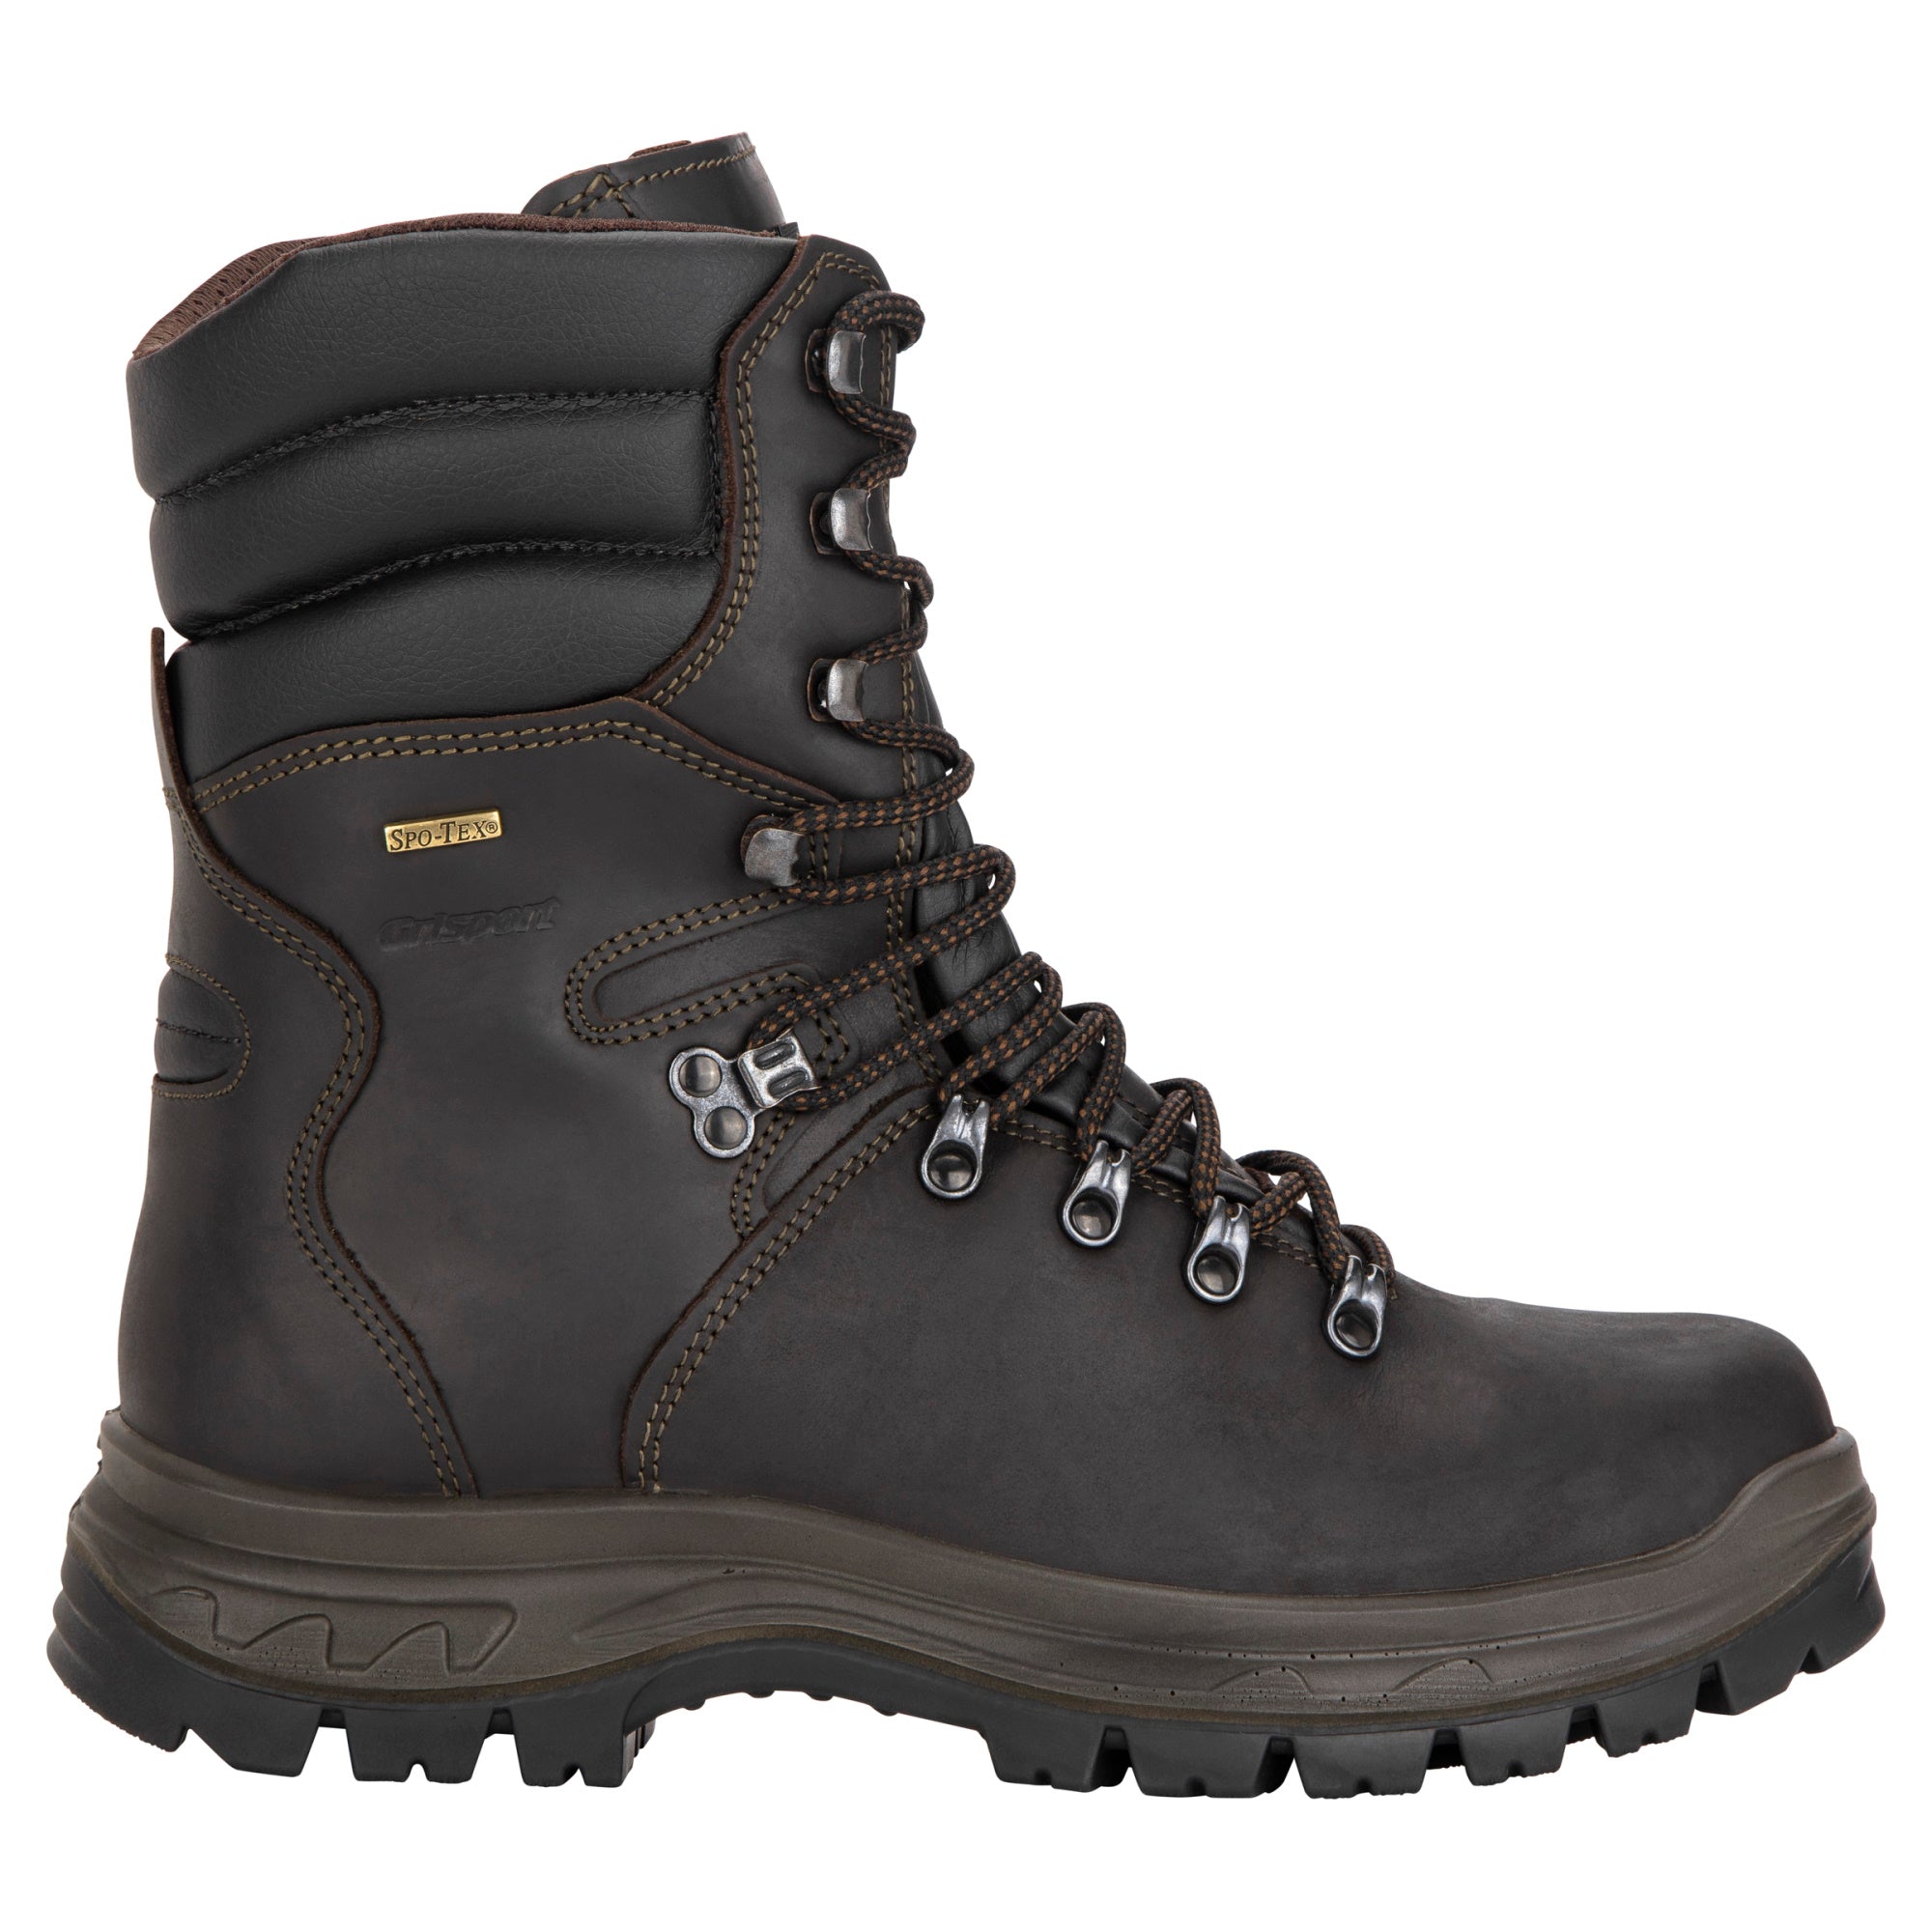 Grisport Hi Country Waterproof Hiking Boots Dark Choc Side